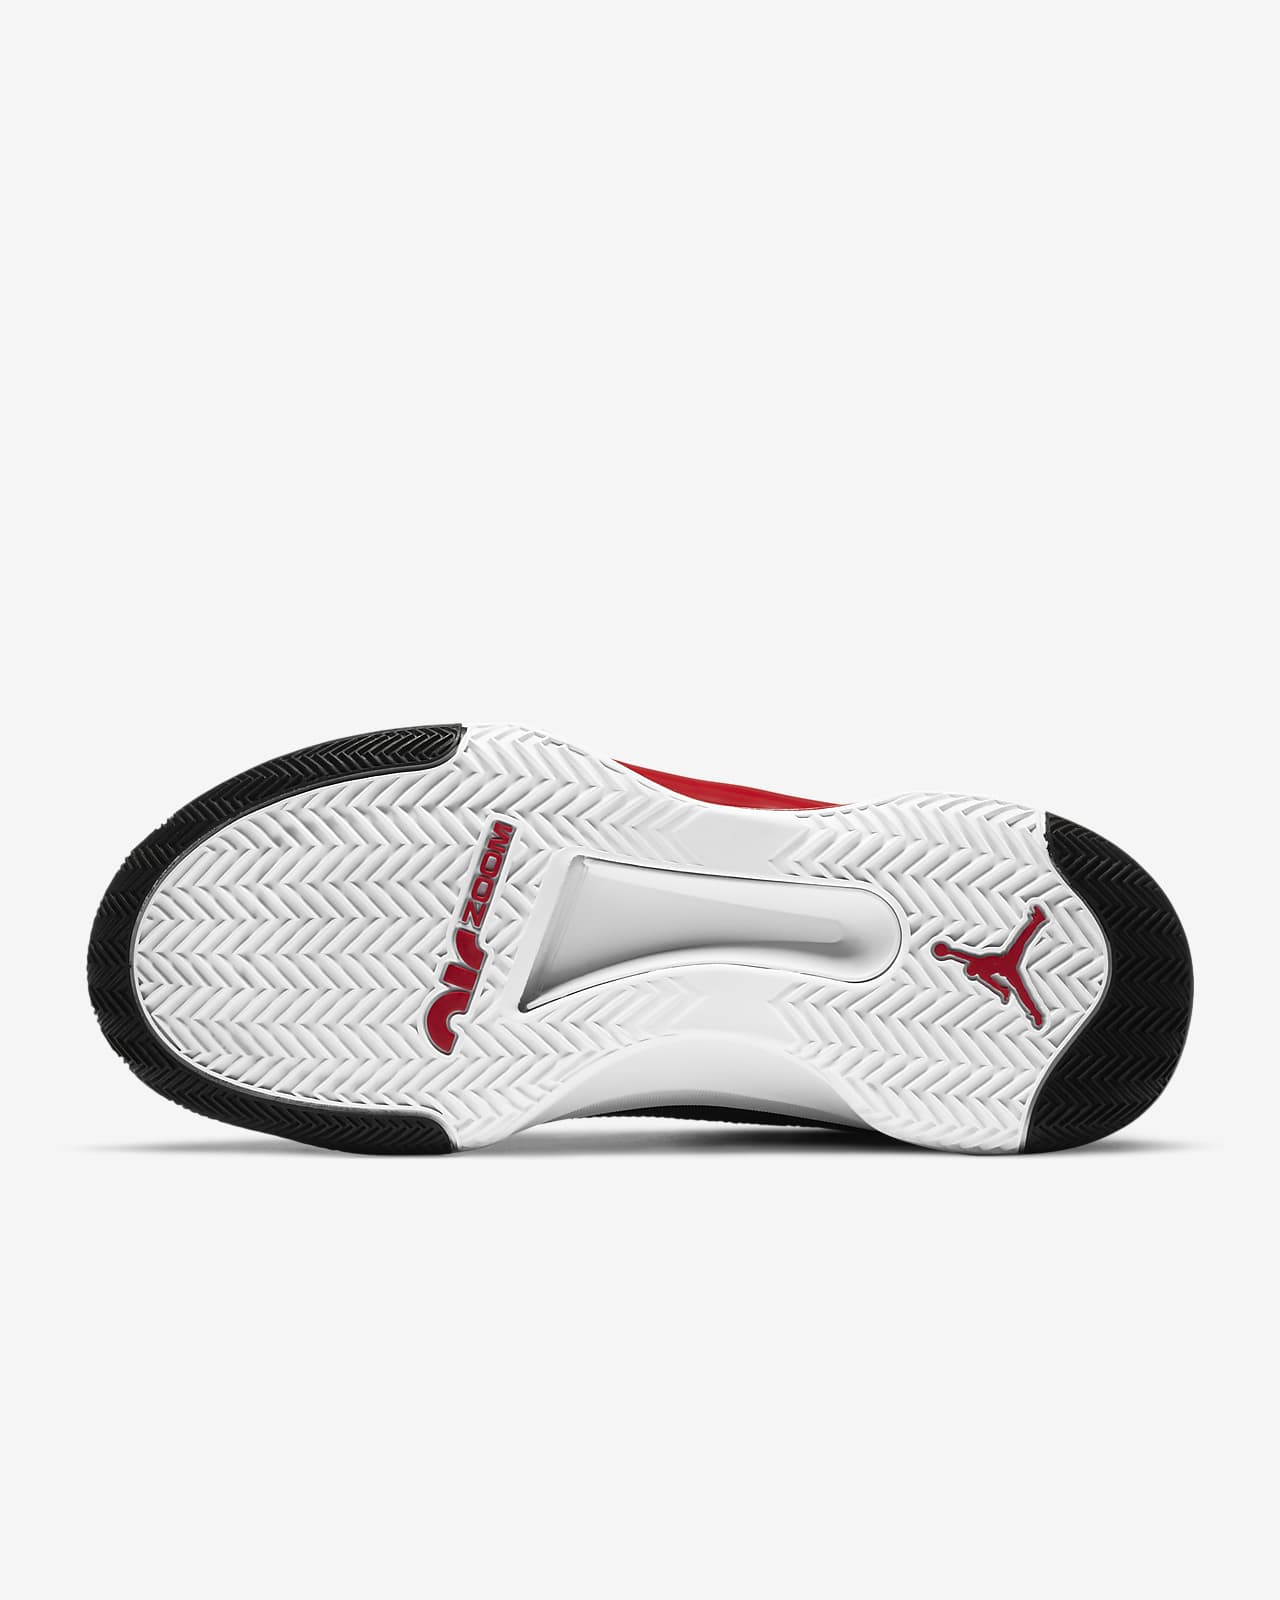 jordan jumpman tennis shoes